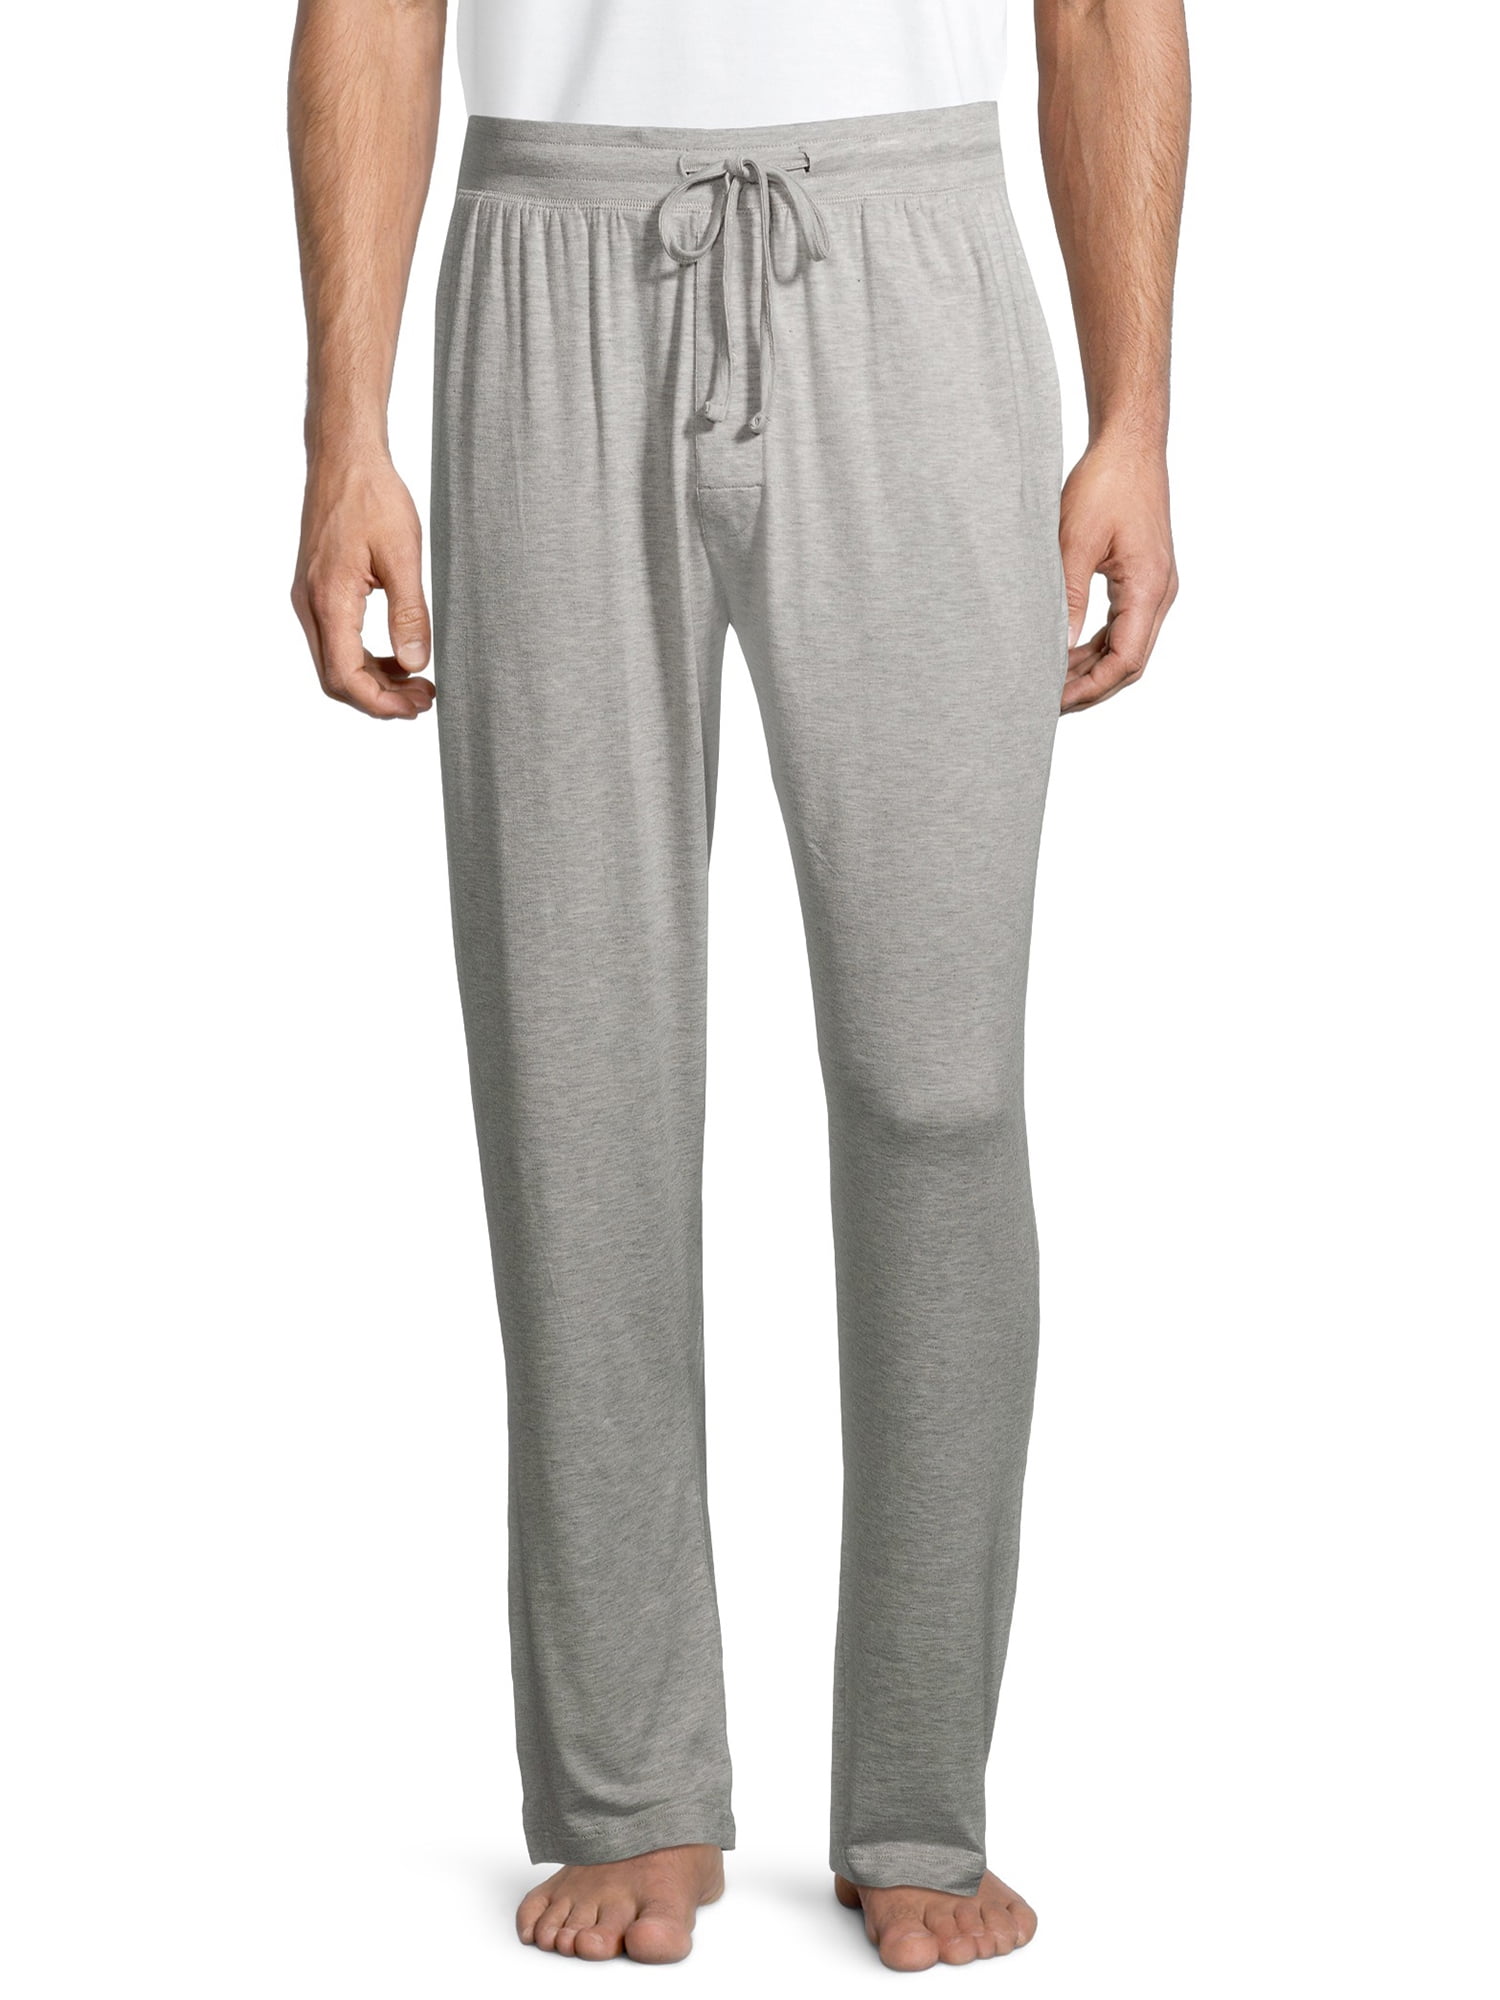 Hanes Men’s Ultrasoft Modal Stretch Cozy Pajama Pants